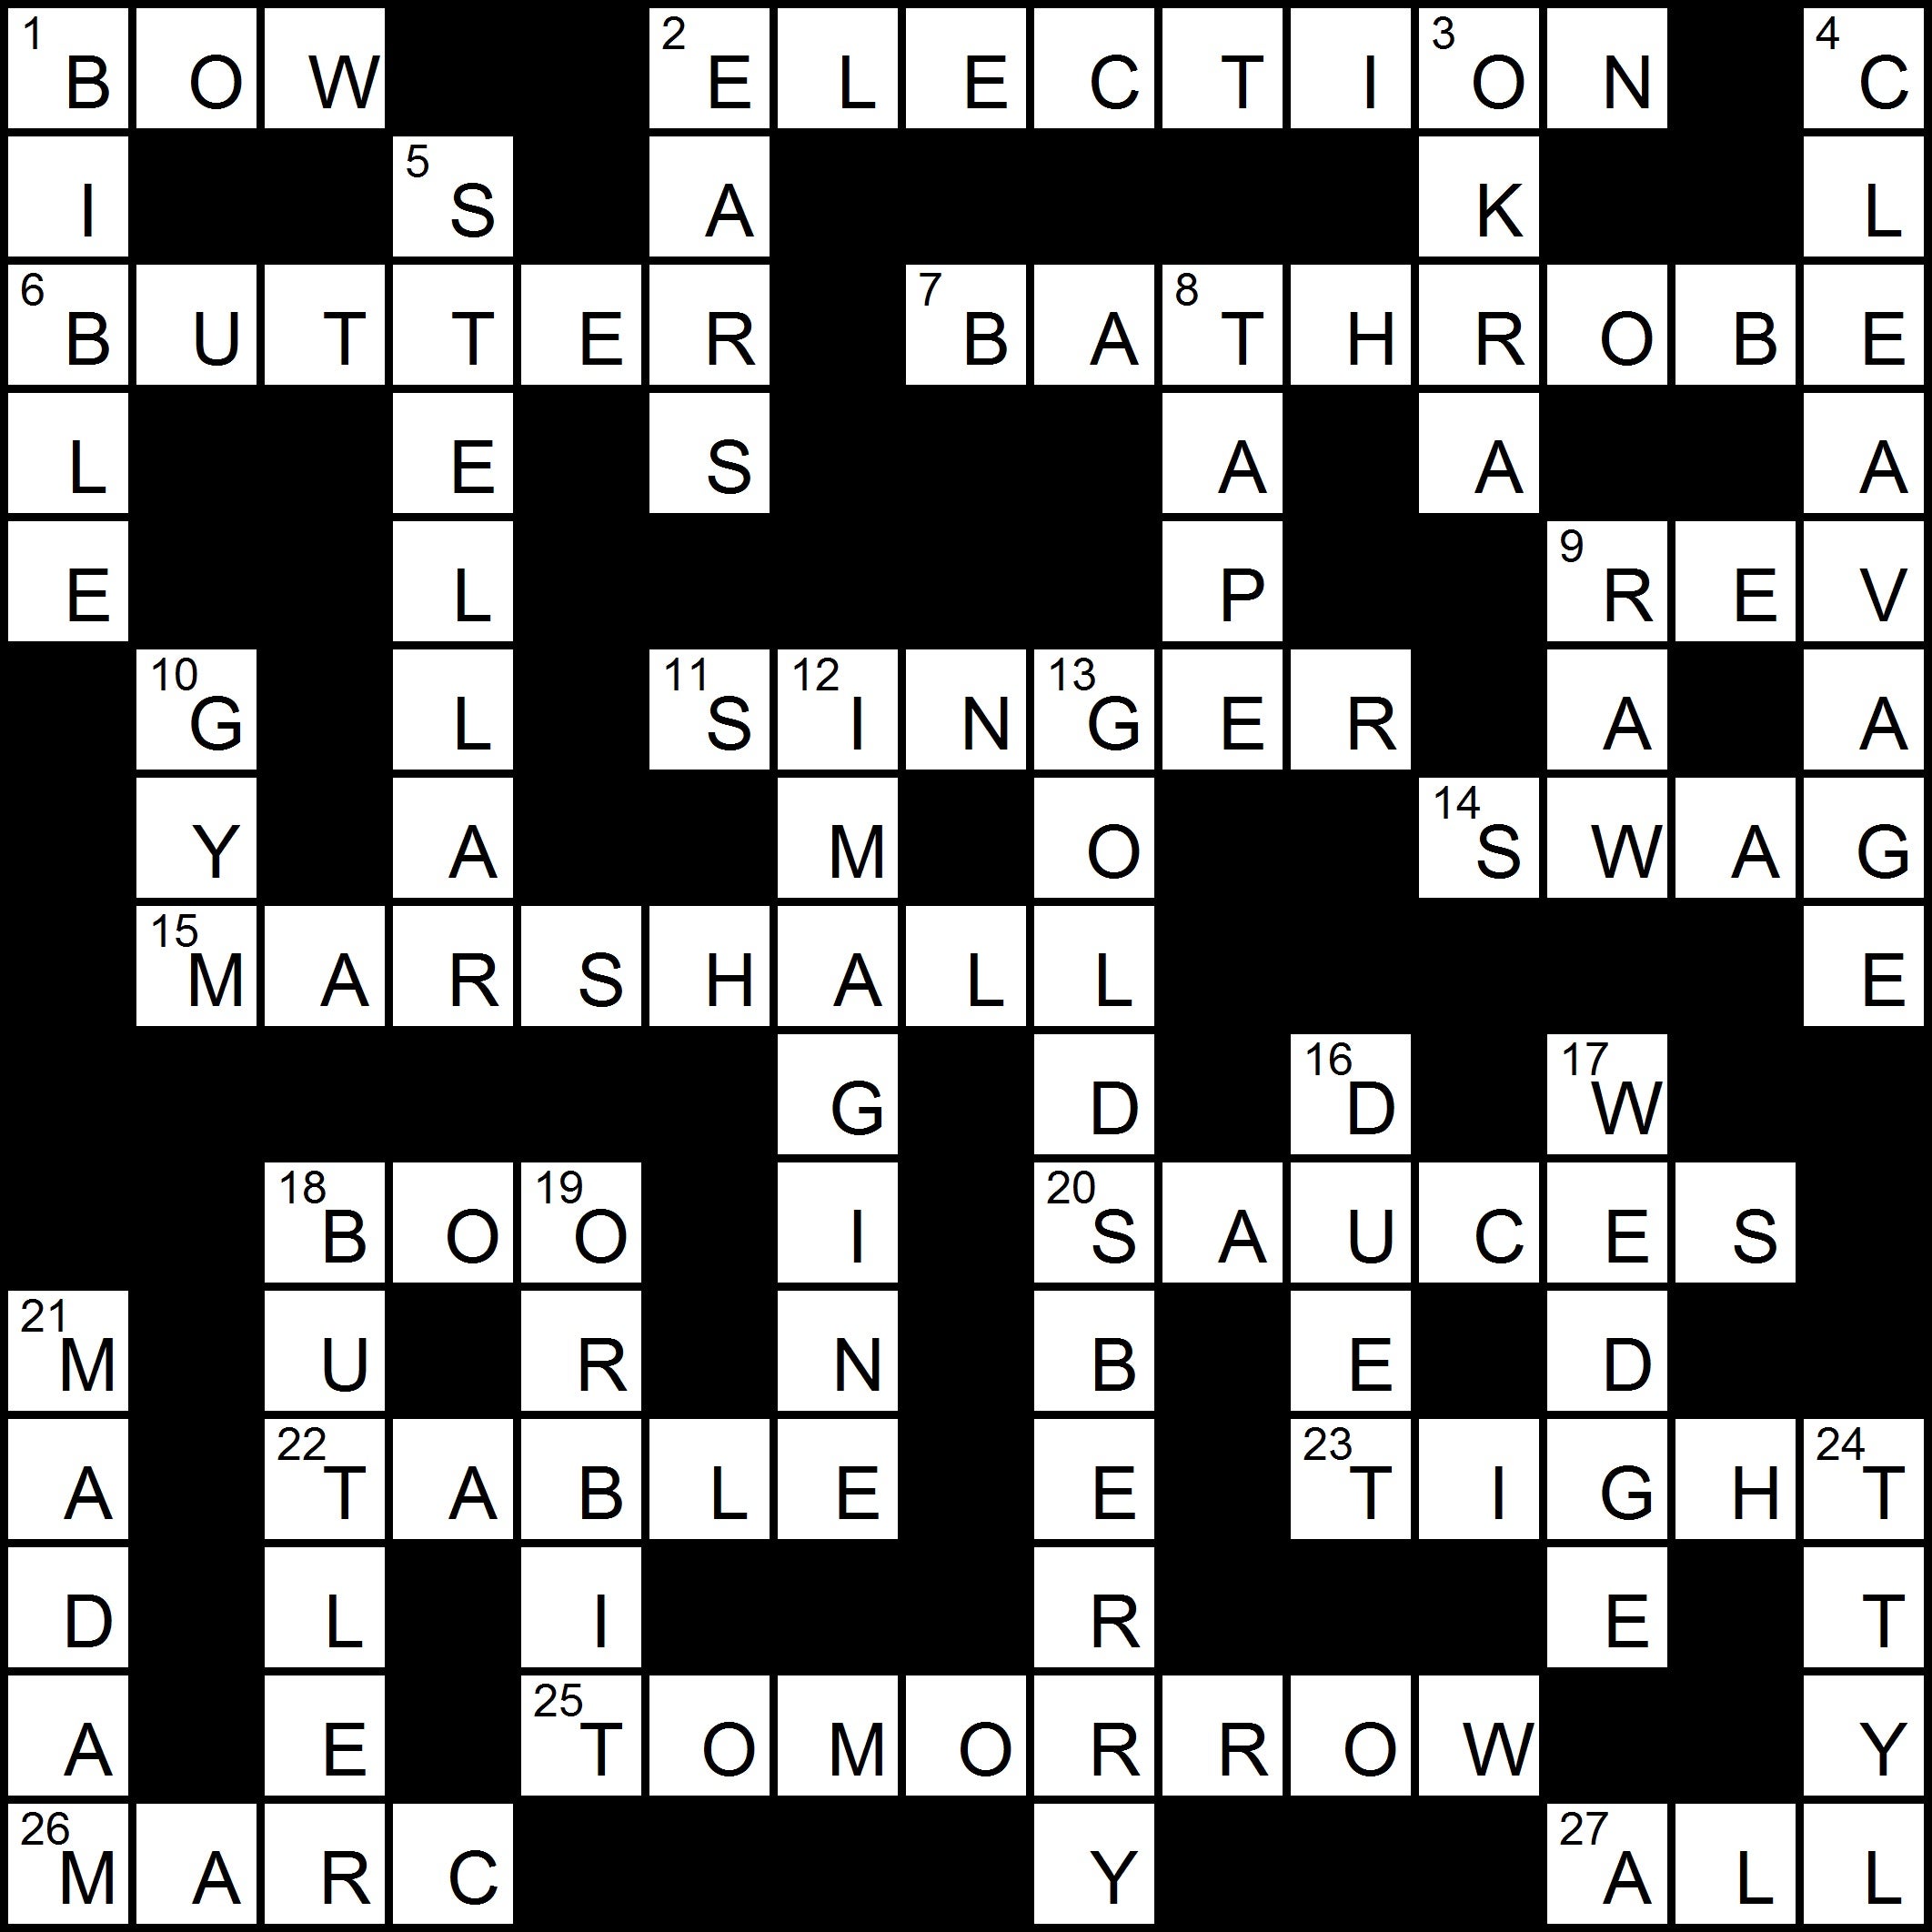 Essence Magazine Crossword Puzzle Answers Essence